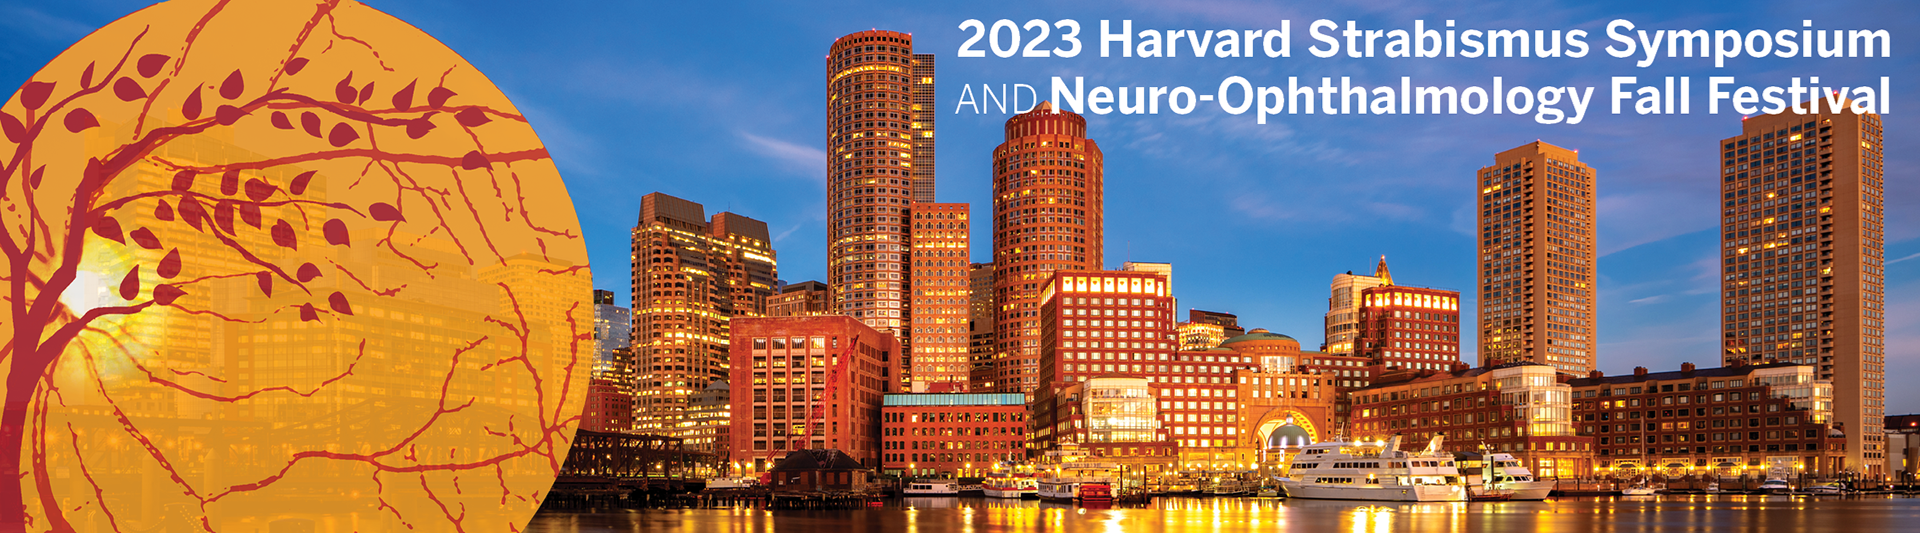 2023 Harvard Strabismus Symposium and Neuro-Ophthalmology Fall Festival